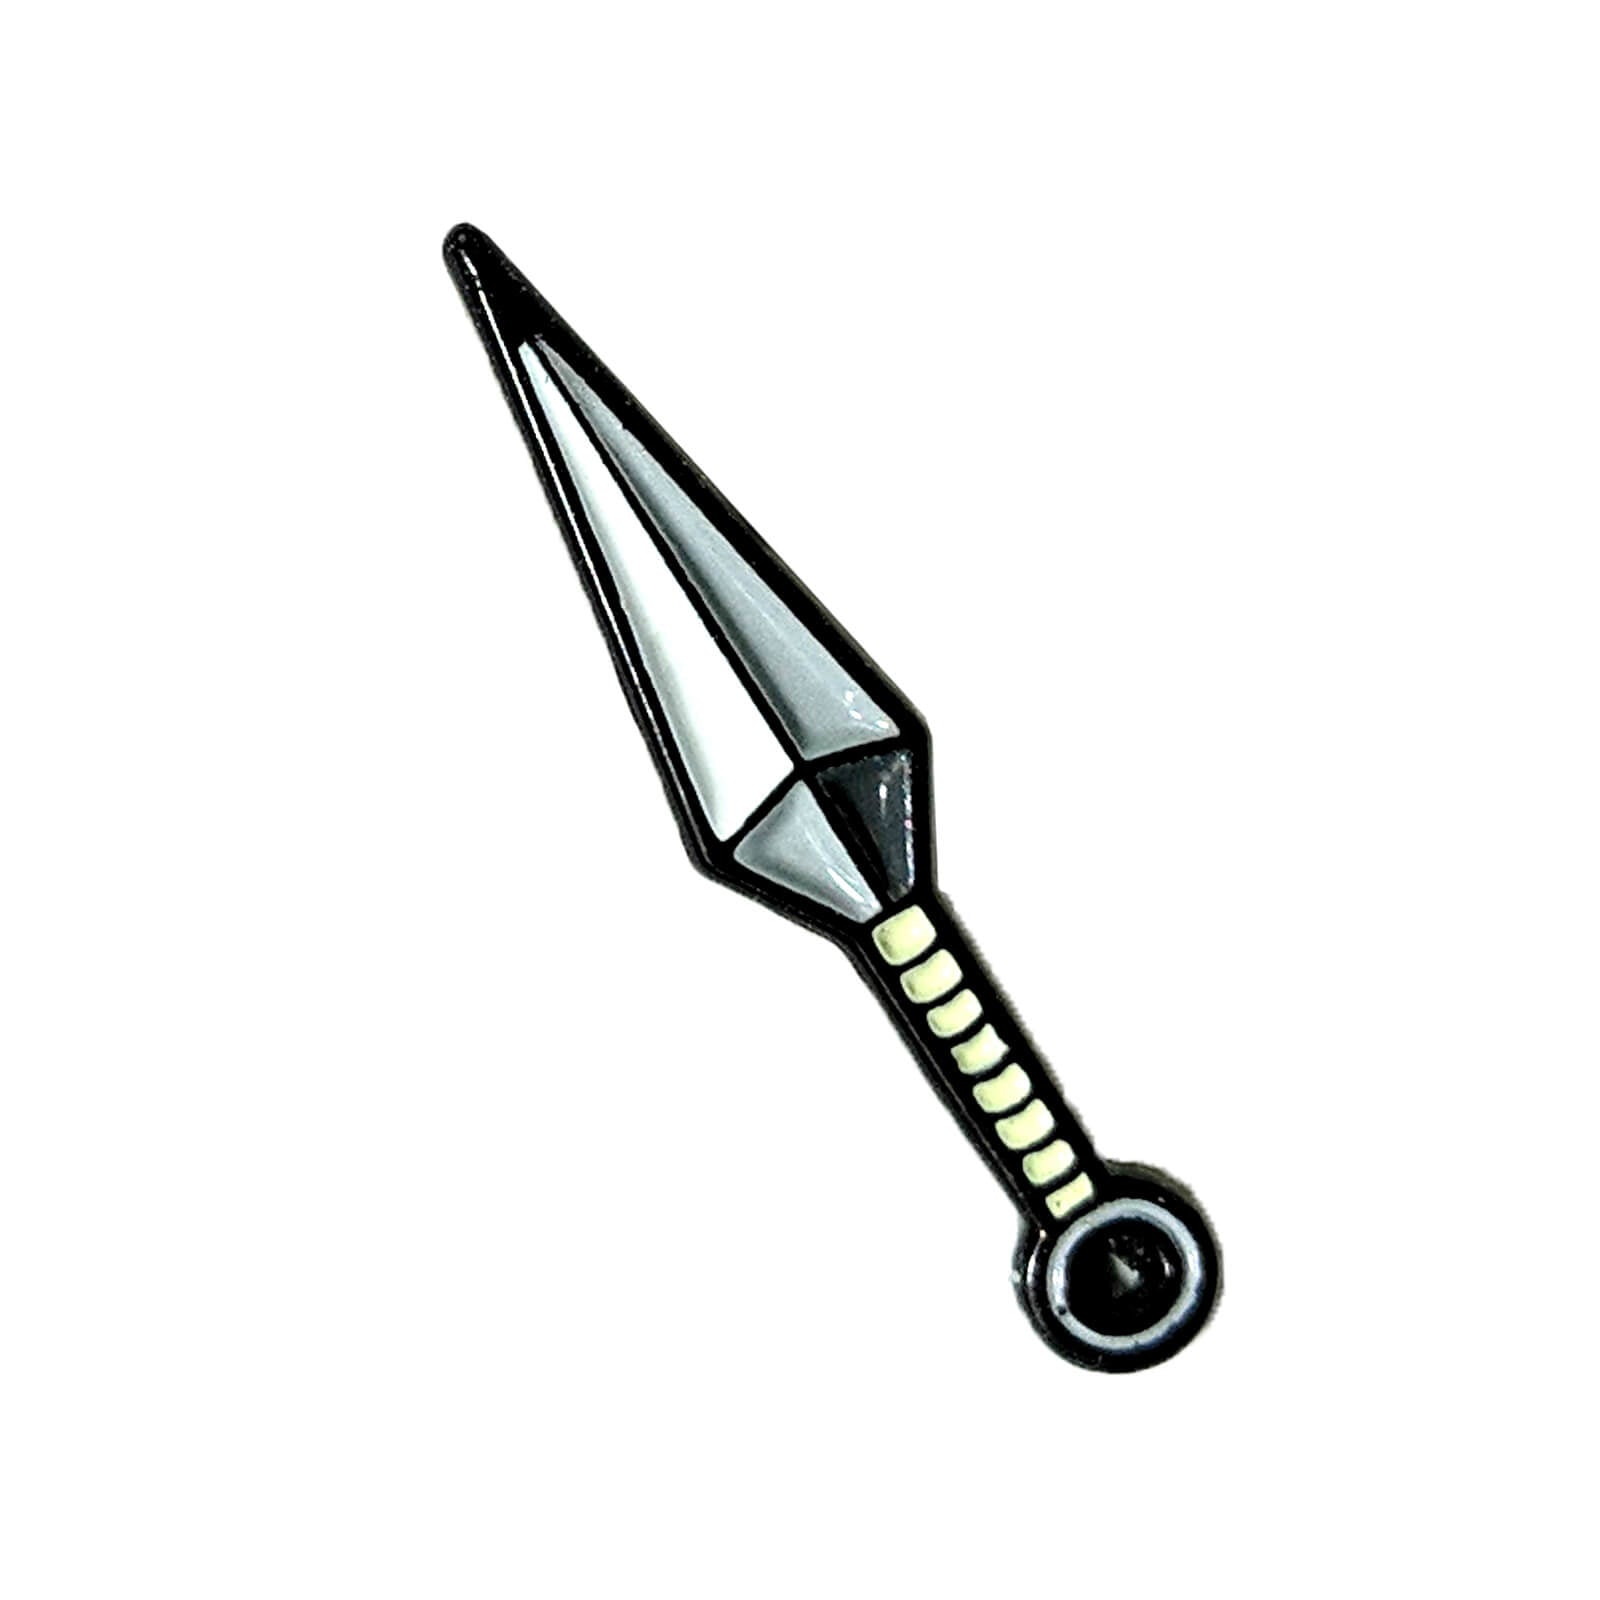 https://kingofthepin.com/wp-content/uploads/2022/01/naruto-weapons-v2-kunai.jpg